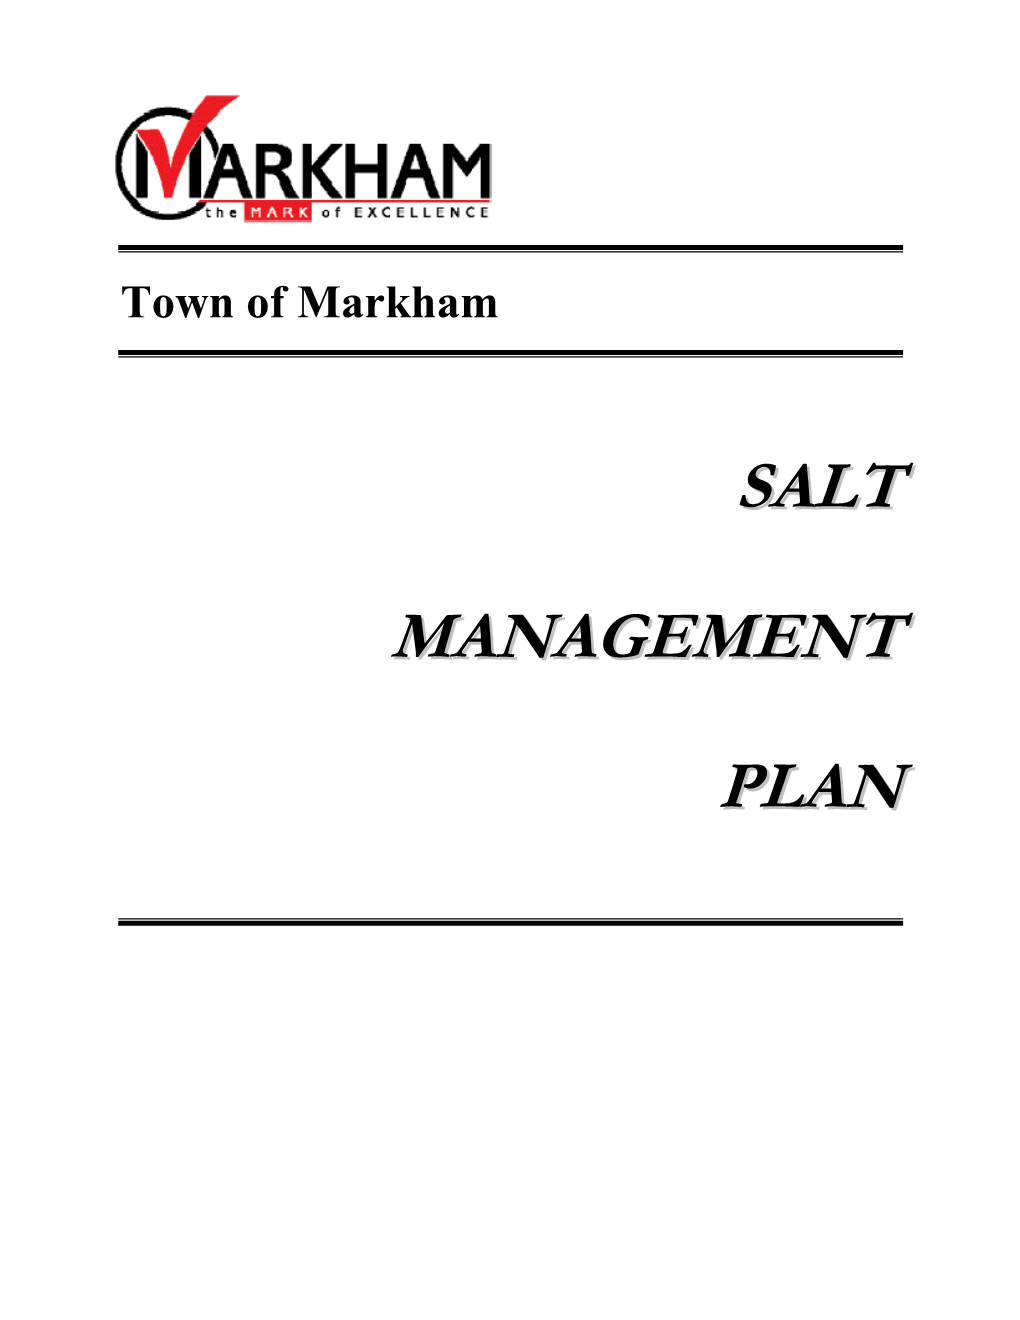 Salt Management Plan